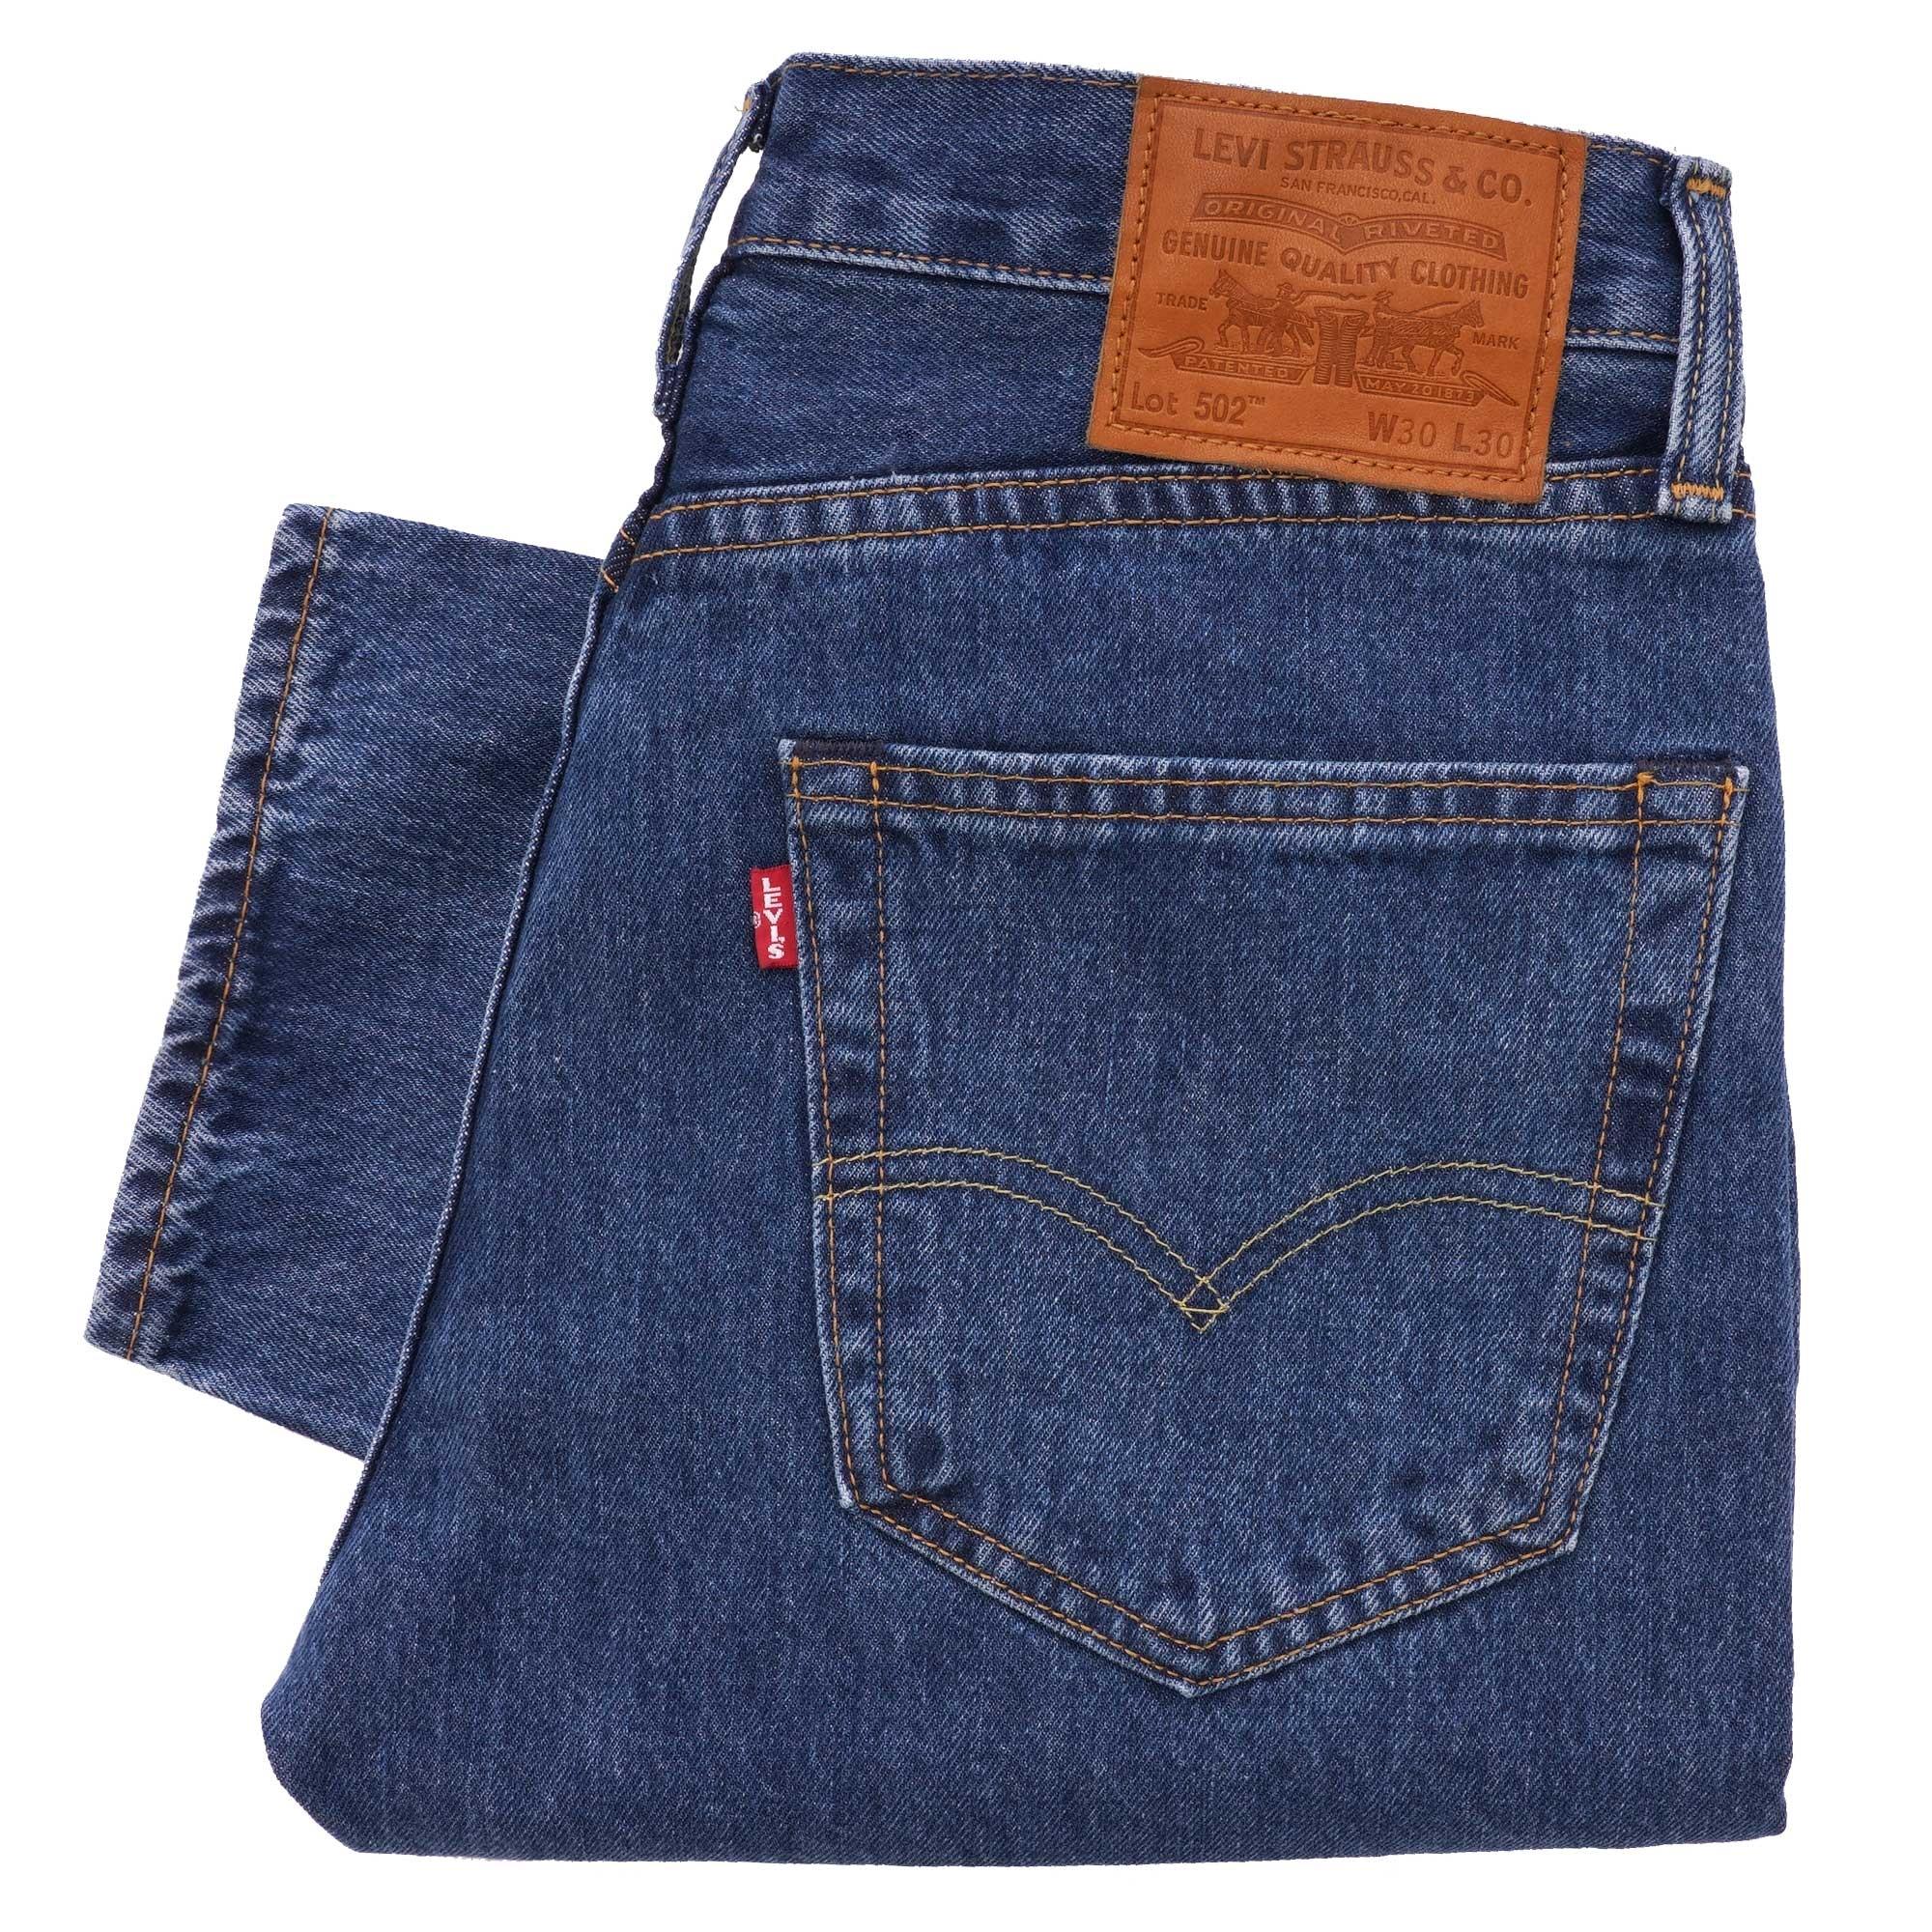 Levi's Denim Levi's Levi's 502 Regular Taper Jeans - Stone Wash 29507-01 in  Blue for Men - Lyst